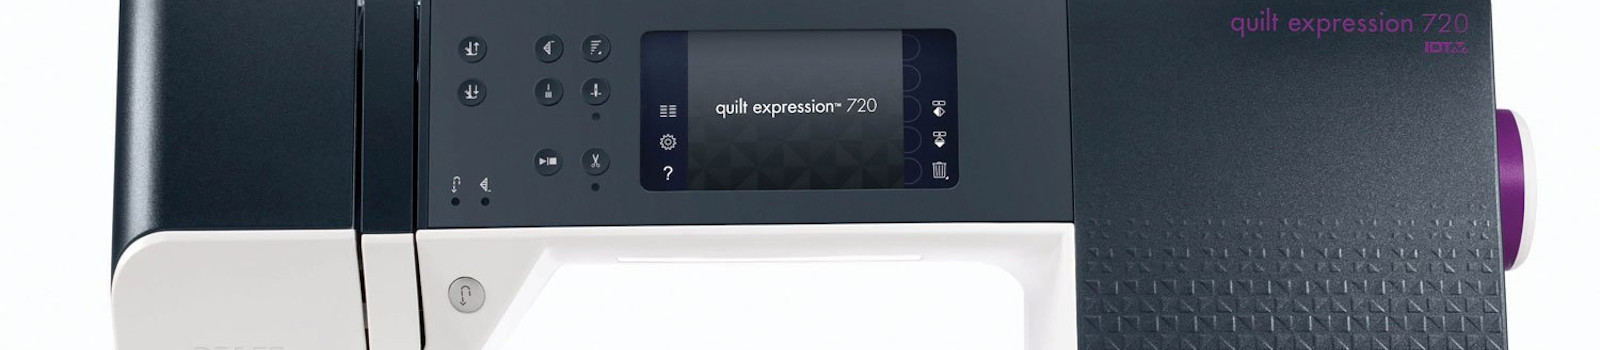 PFAFF quilt expression 720